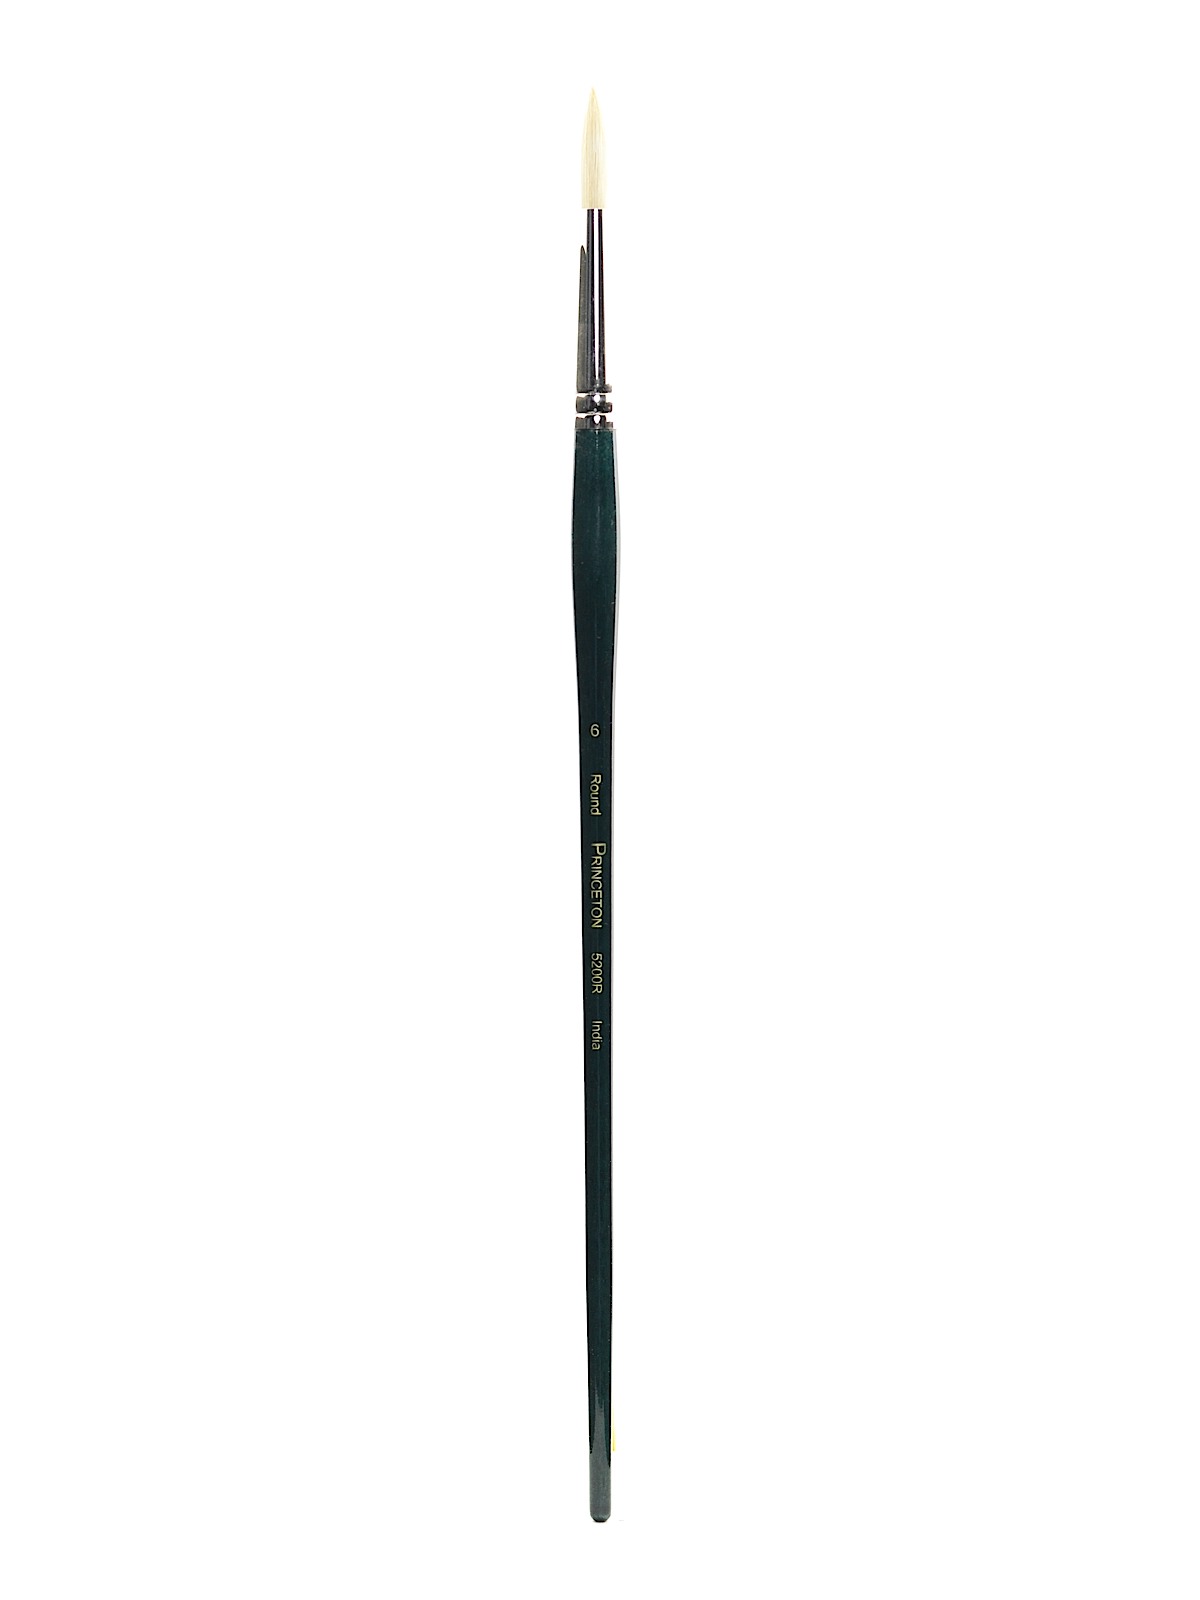 Series 5200 Ashely Better Interlocked Bristle Long Handle Brushes 6 Round